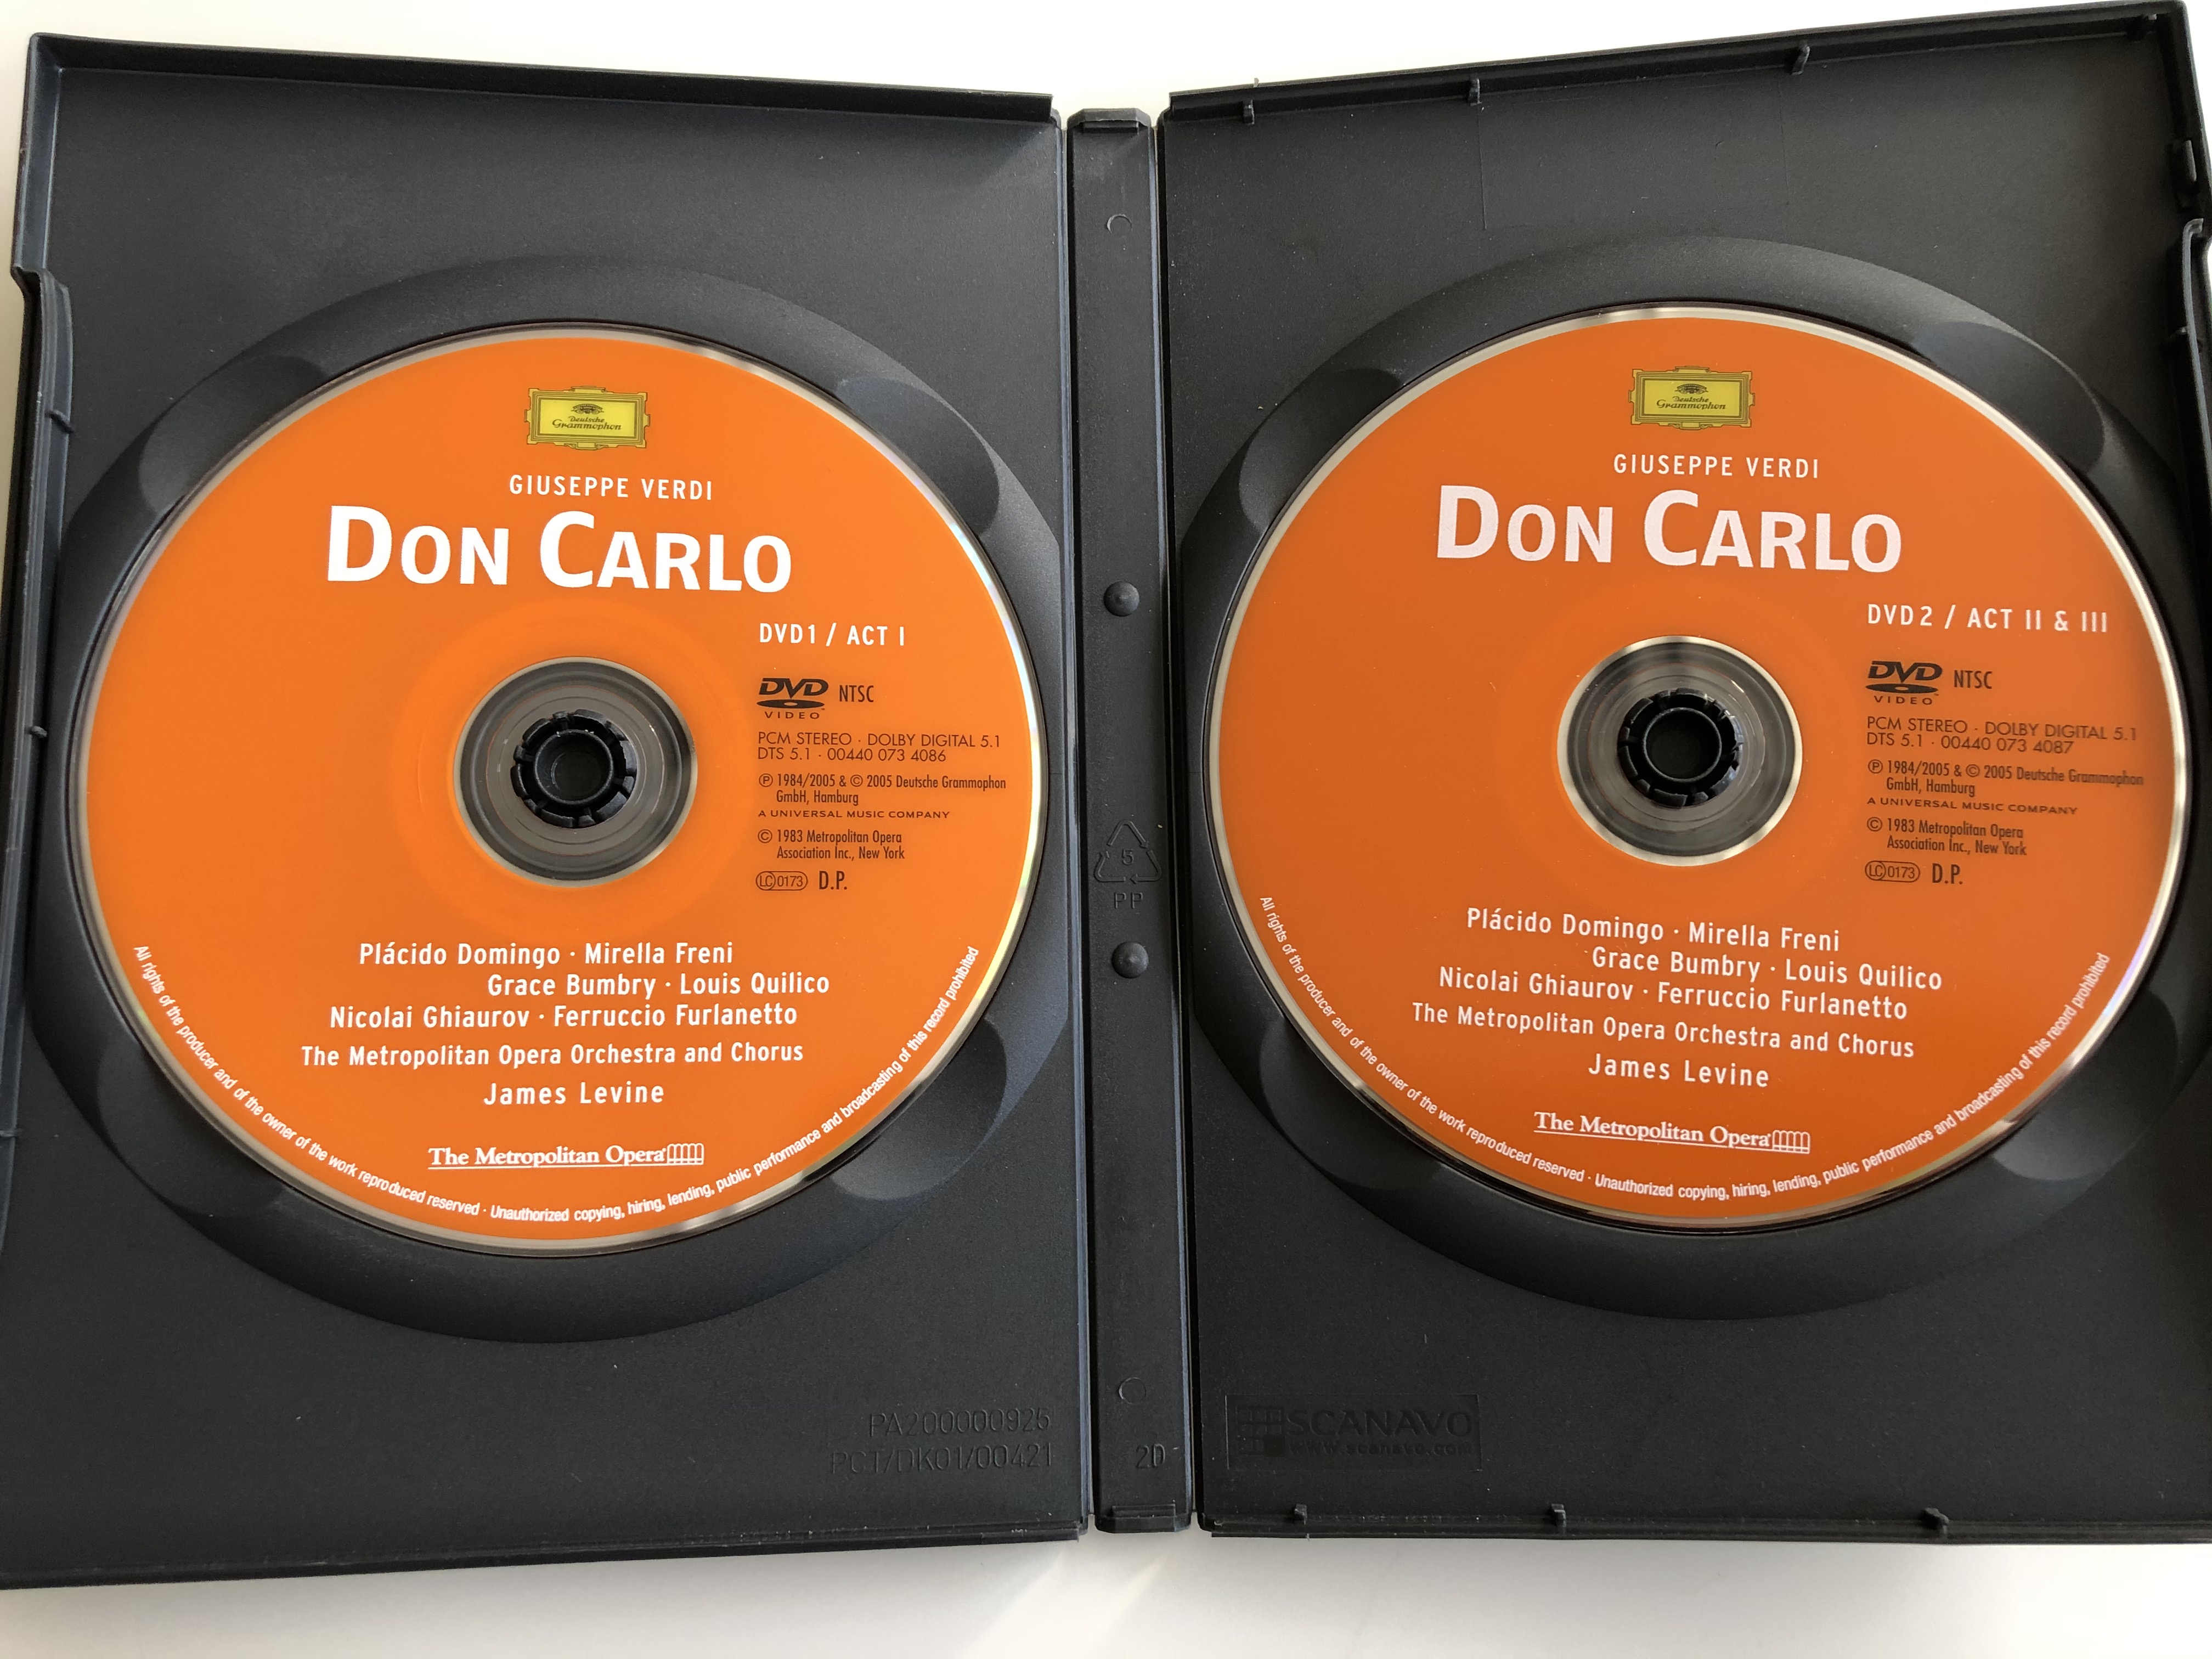 verdi-don-carlo-dvd-2002-pl-cido-domingo-mirella-freni-4.jpg